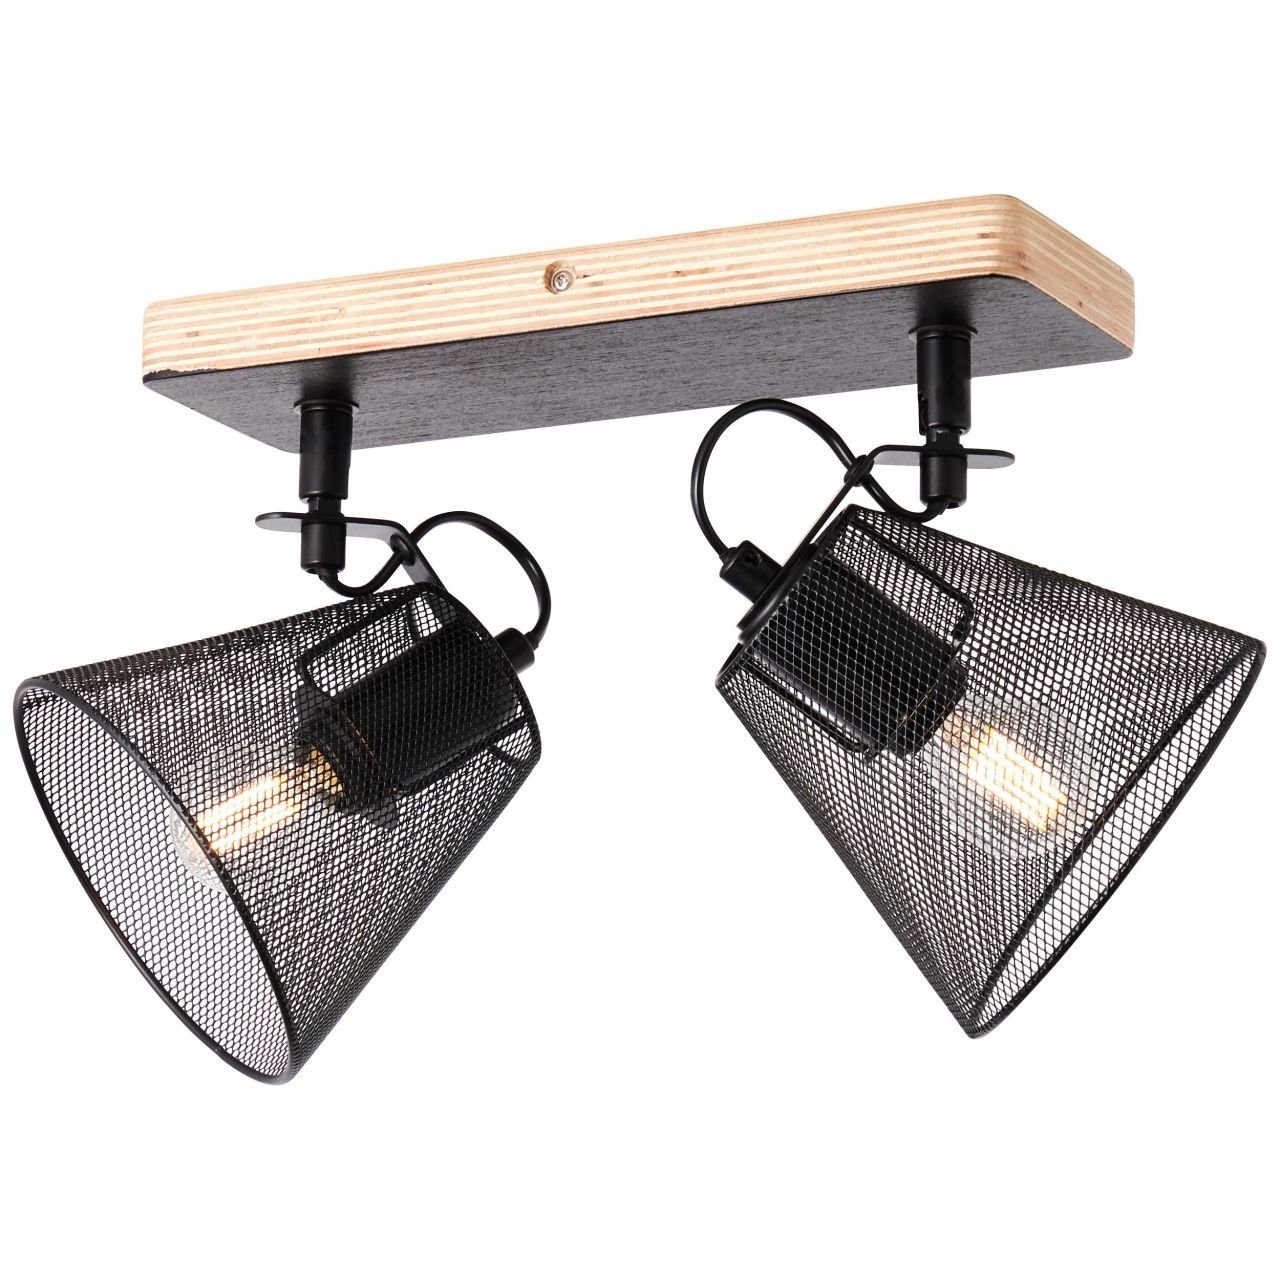 Spotbalken 2x D45 Whole, 2flg Brilliant Lampe, Whole schwarz/holzfarbend, Metall/Holz, Deckenleuchte